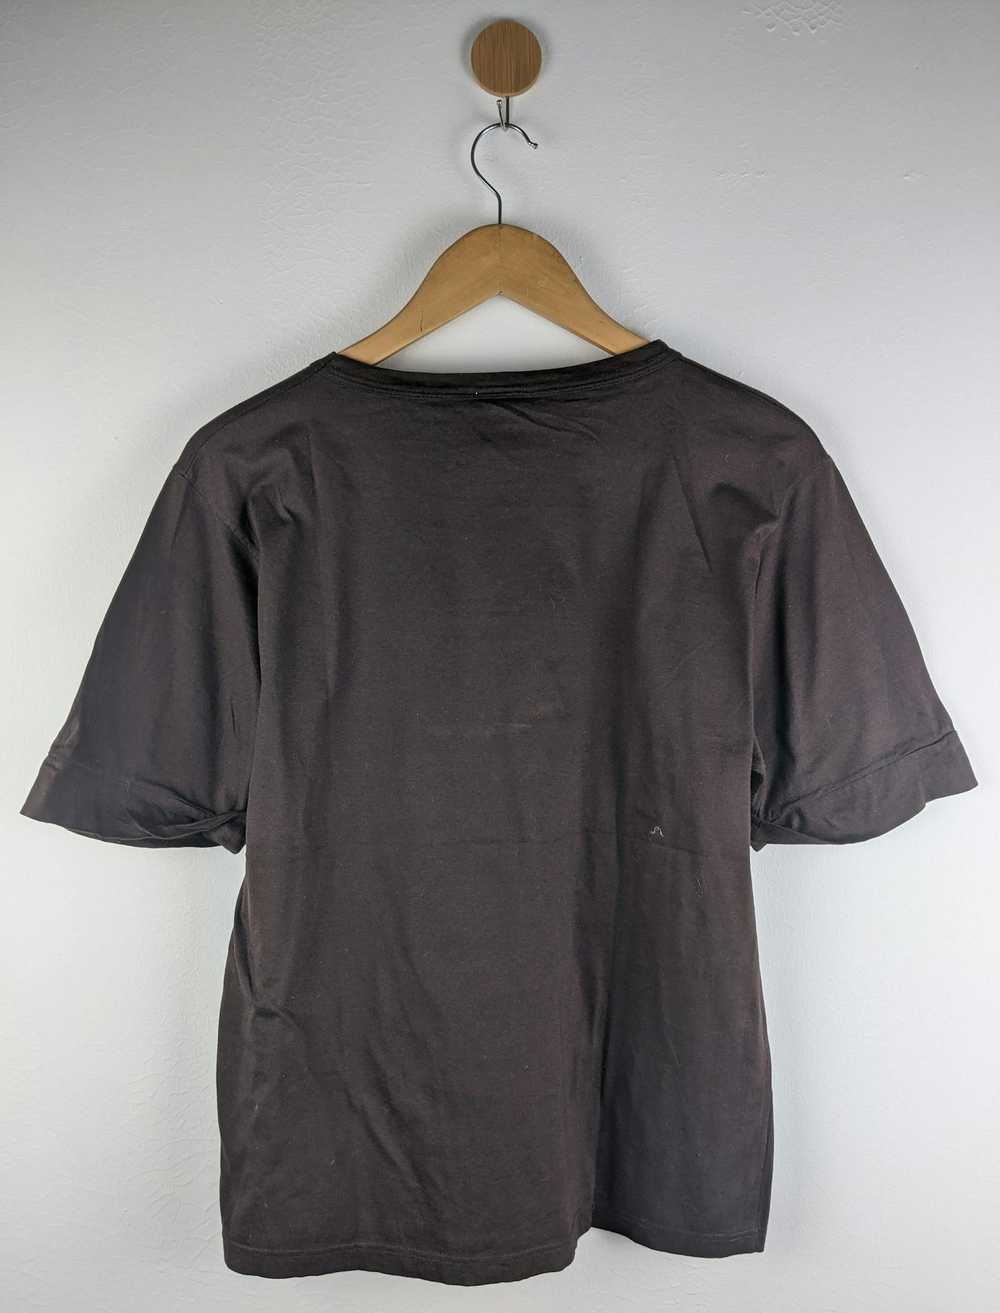 Fendi Fendi Futurism shirt - image 3